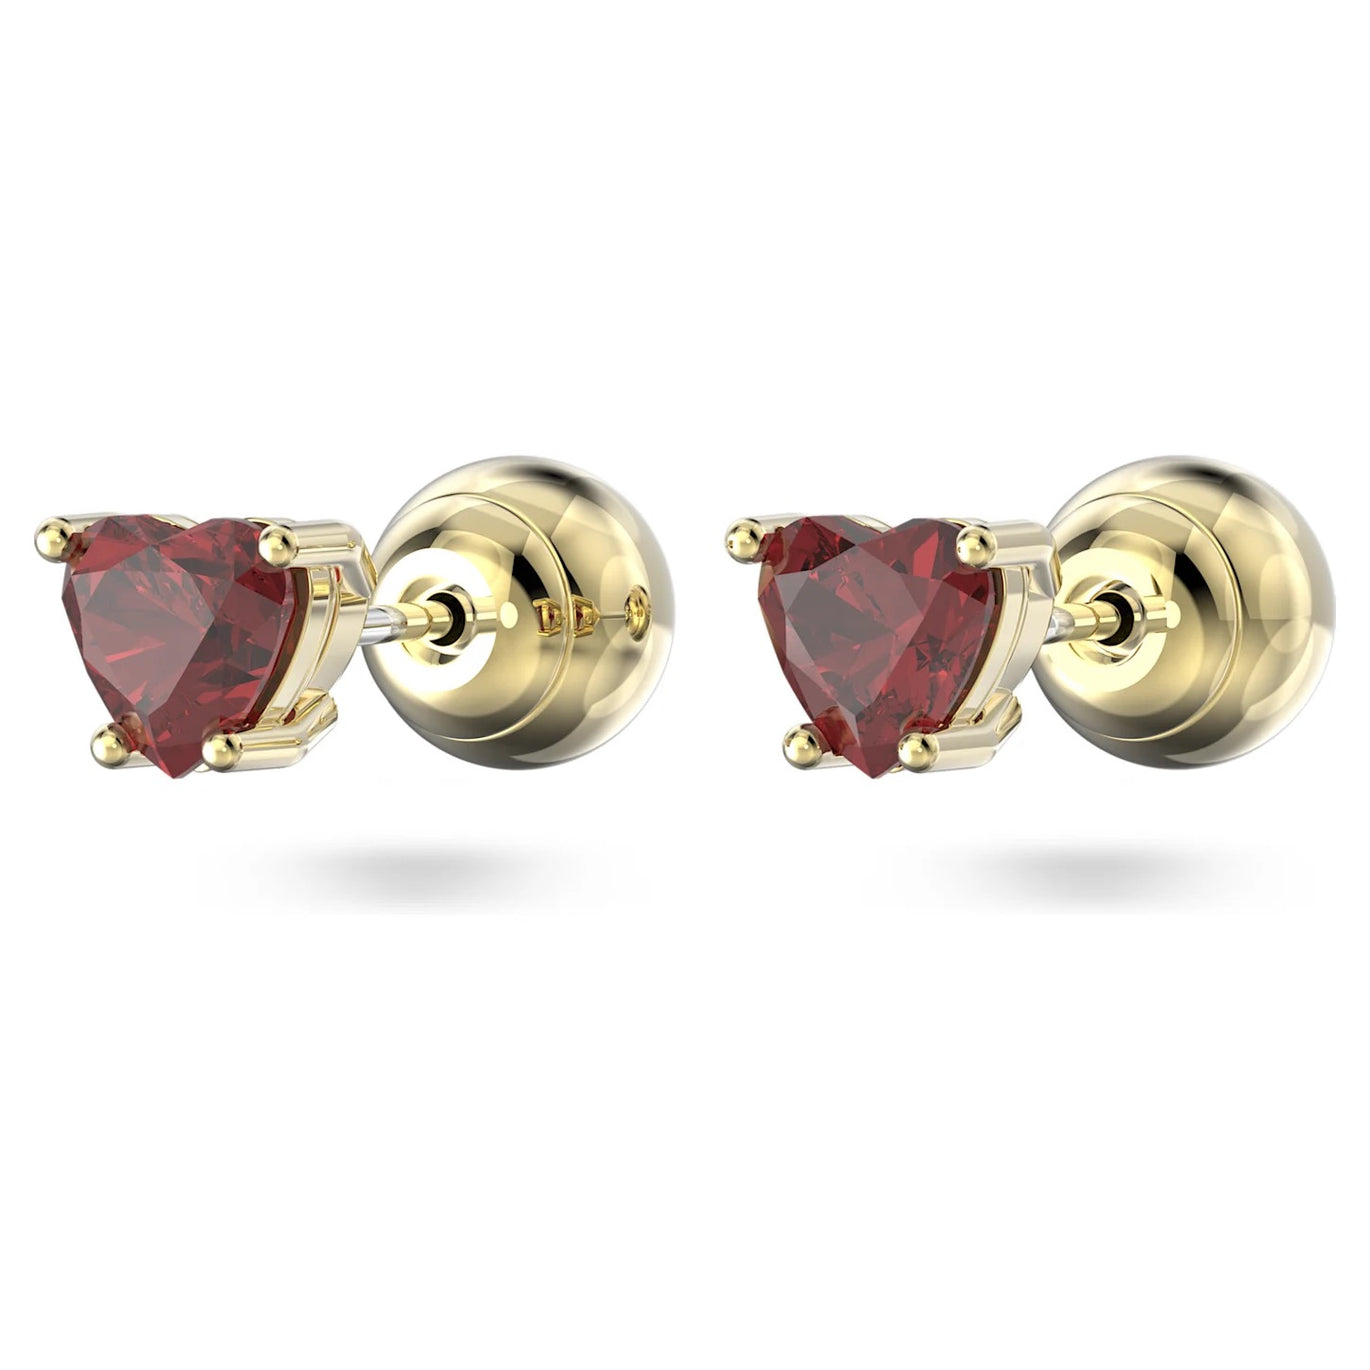 Swarovski Stilla Red Heart Stud earrings, Gold-tone plated